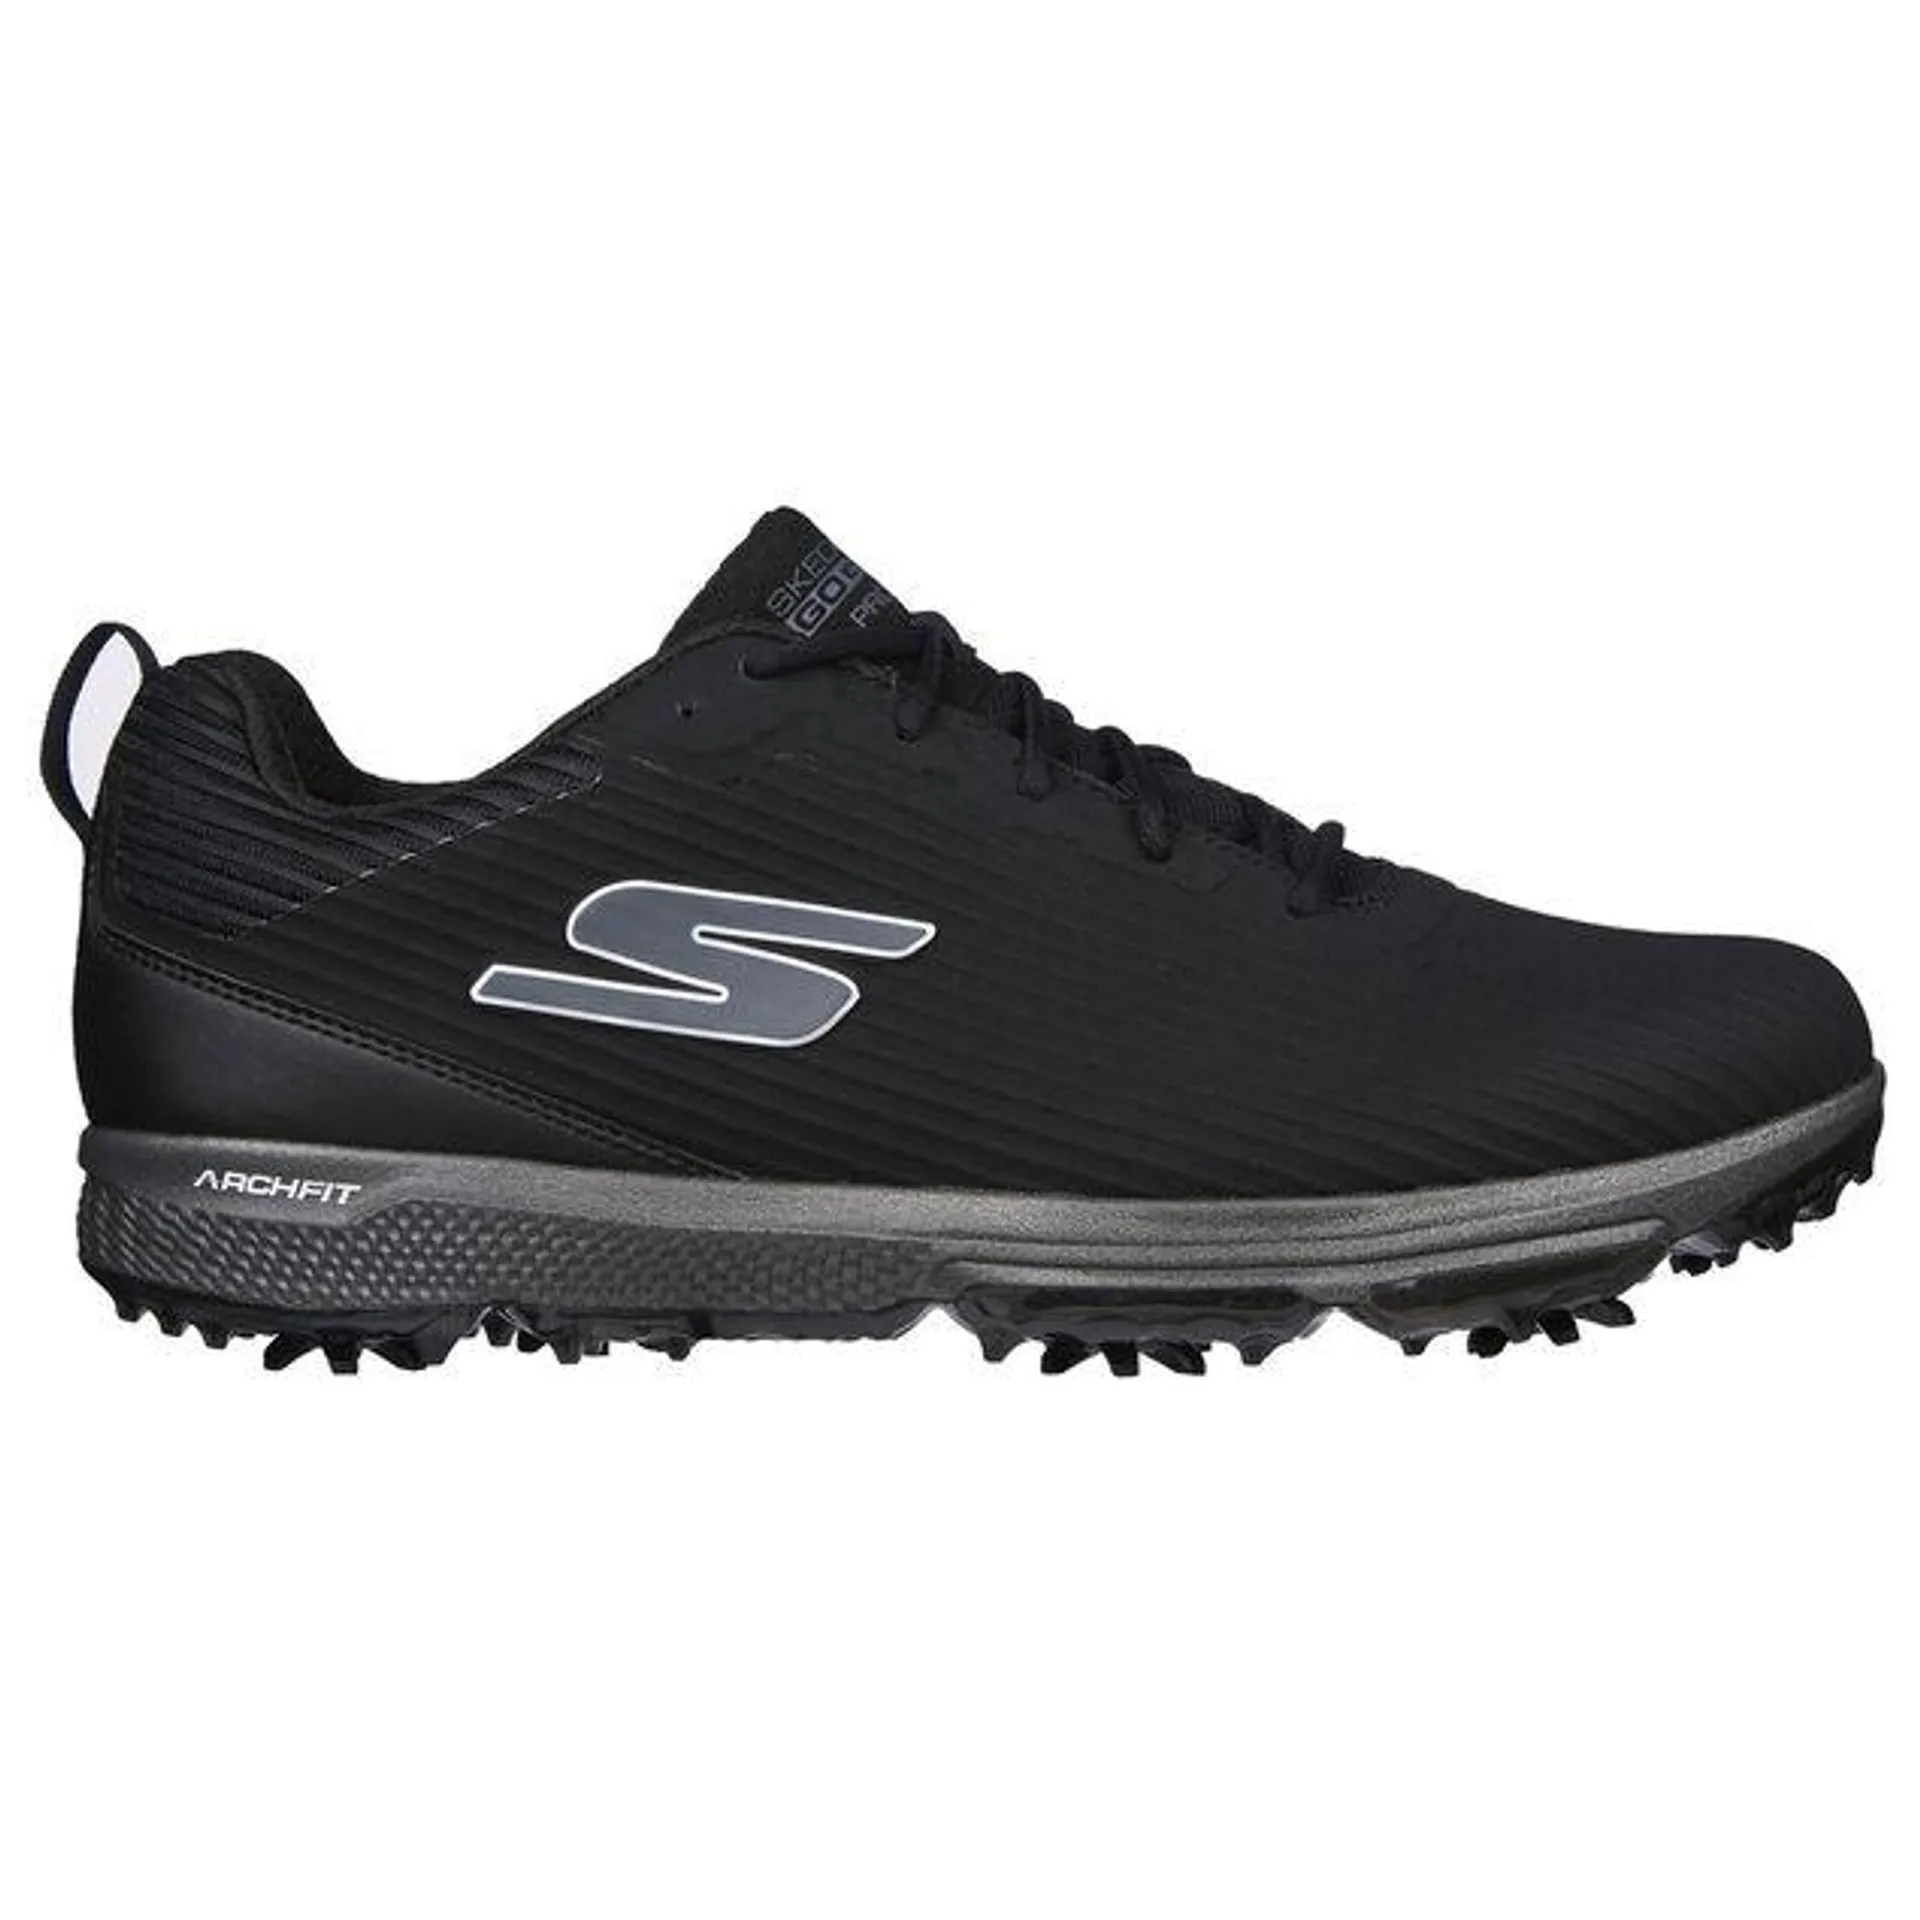 Skechers Men's GO GOLF Pro 5 Hyper Waterproof Spiked Golf Shoes